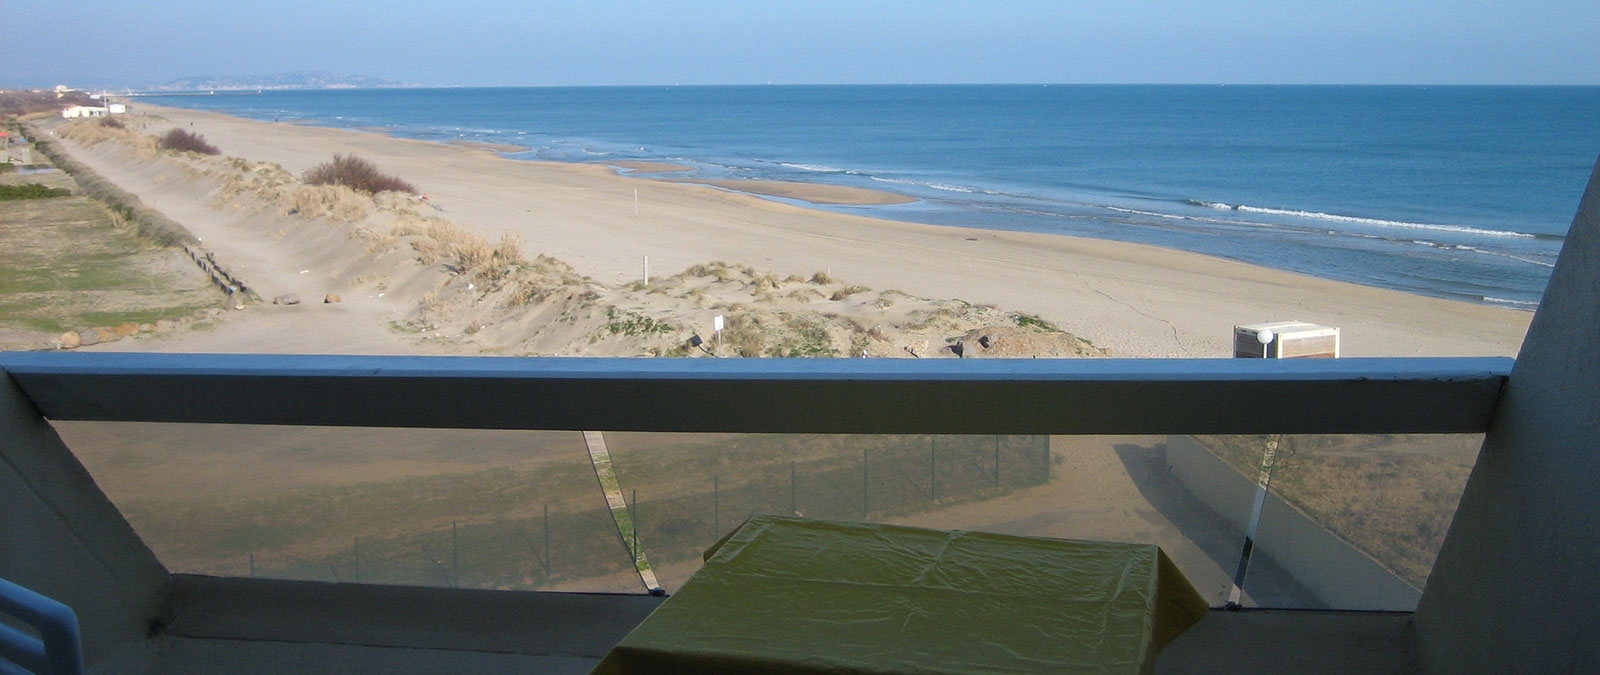 Location studio naturiste classique terrasse avec vue sur la mer